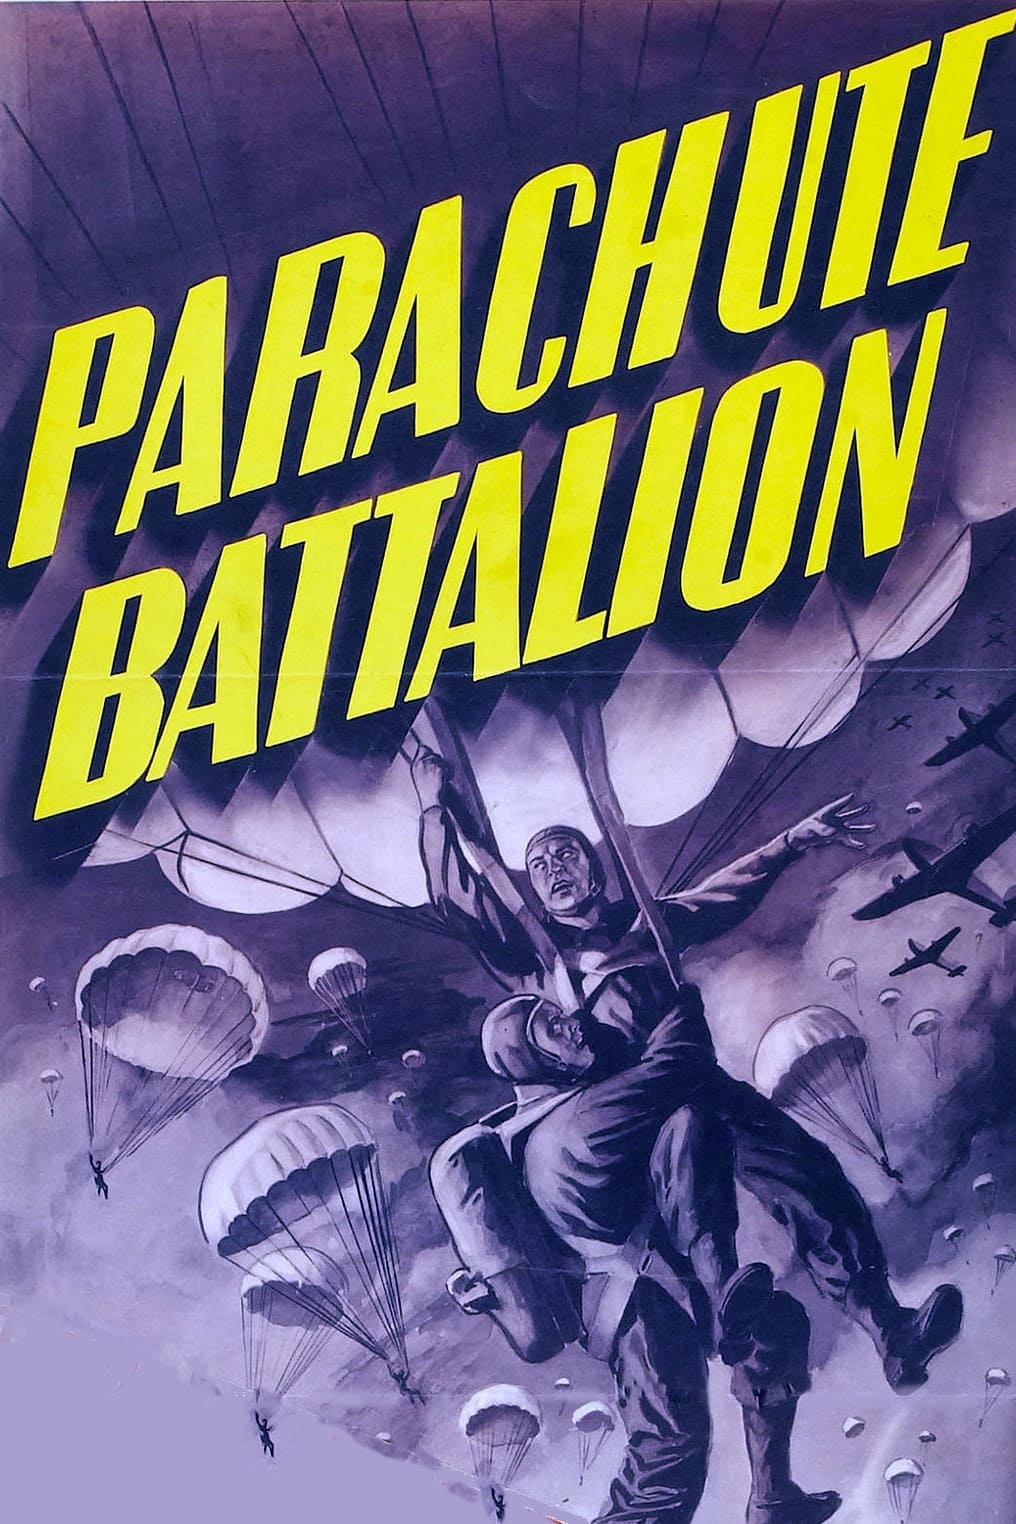 Parachute Battalion (1941) постер